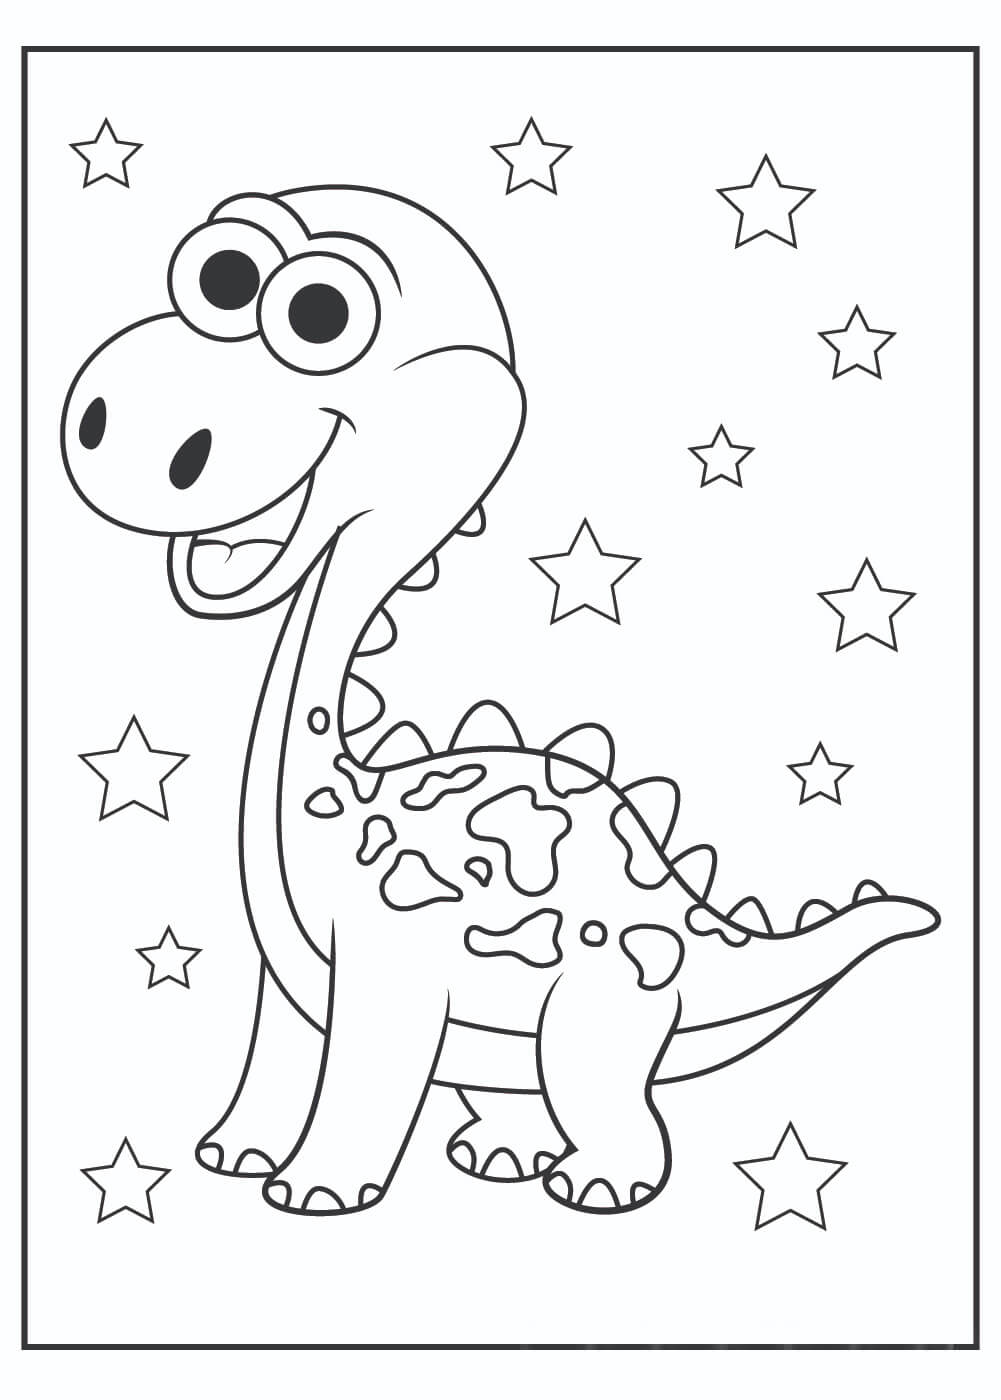 Dinosaurus Byl Obklopen Hvězdami omalovánka